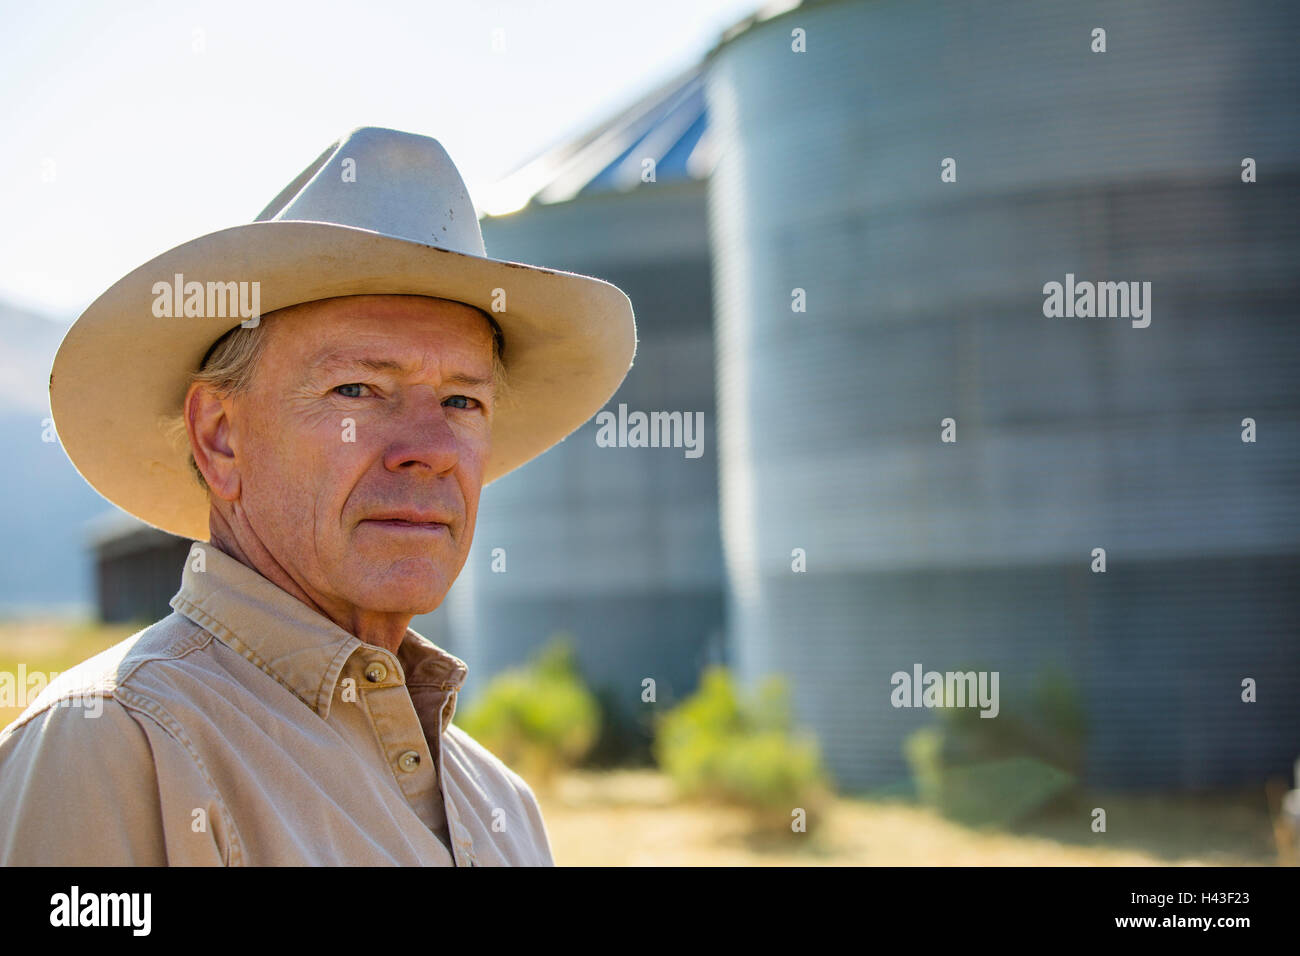 Serious Caucasian farmer near storage silos Stock Photo